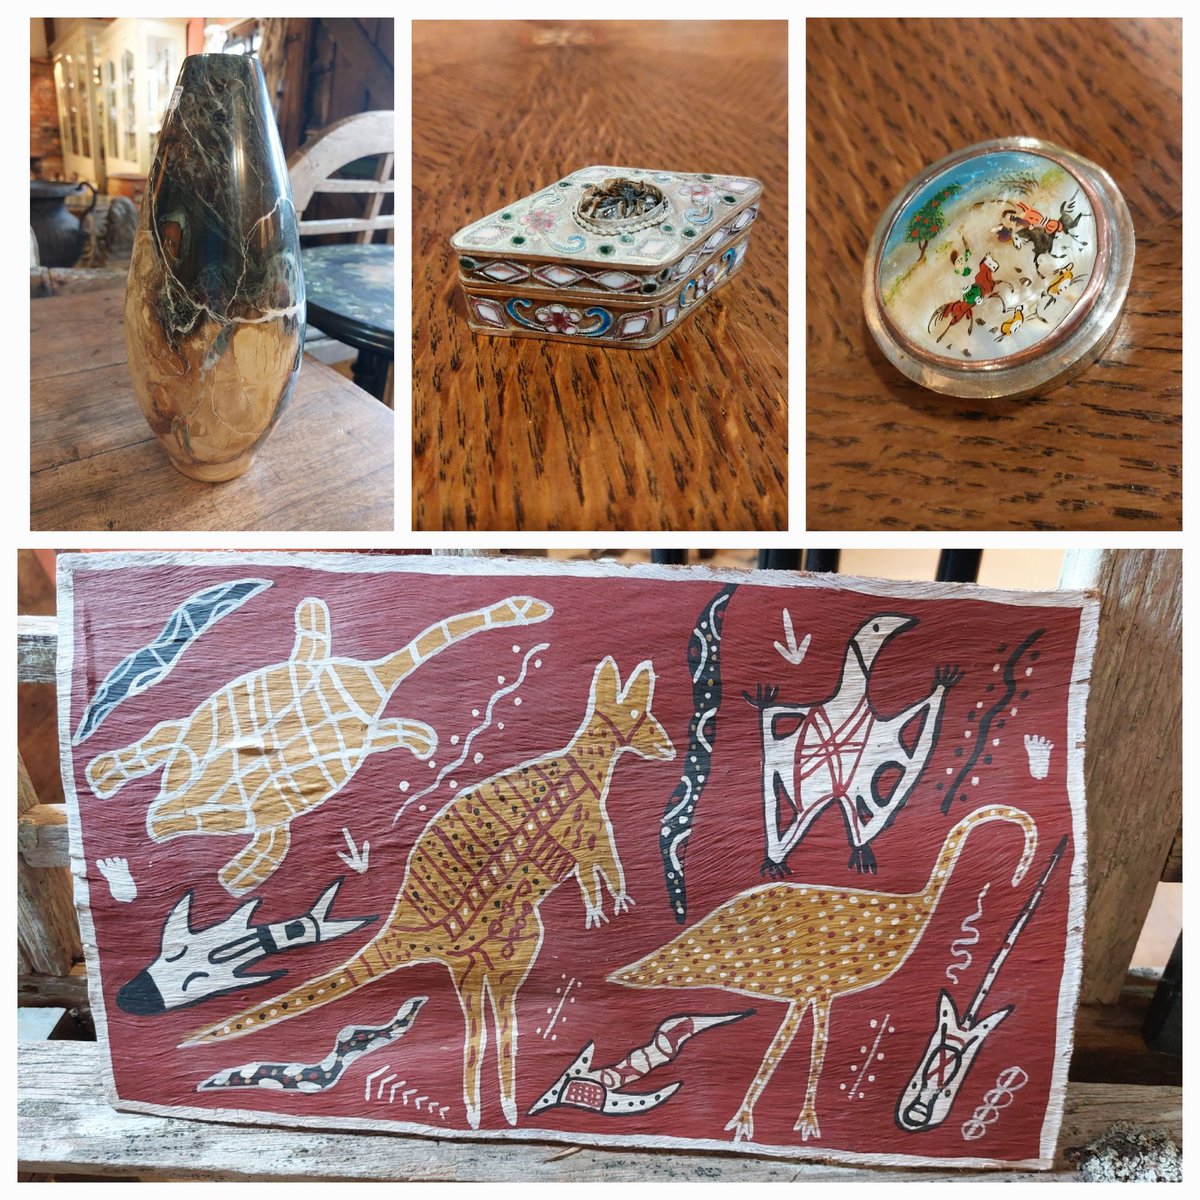 #artsandcraftschair #stonevase #indianpillbox #handpaintedpillbox #Aboriginalart #eversleybarnantiques #judismithantiques